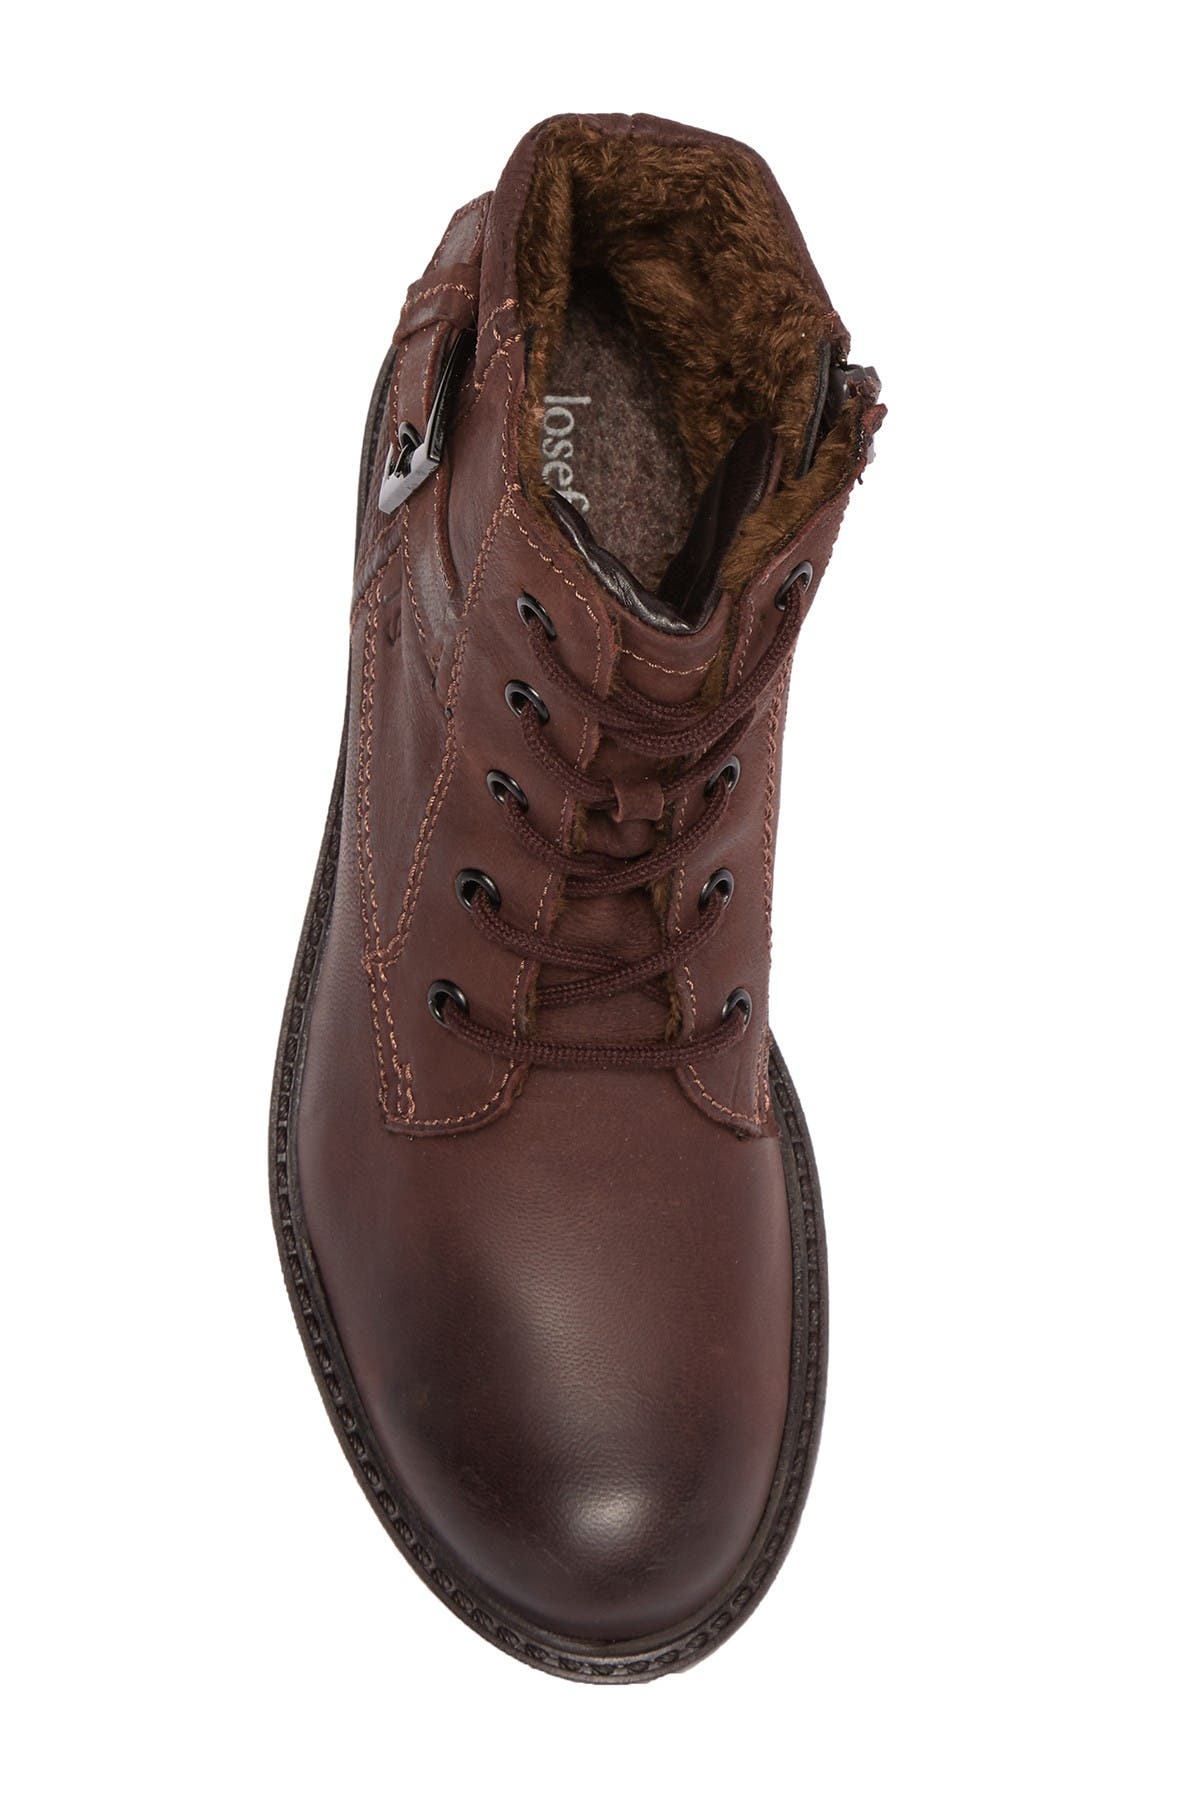 josef seibel marylin 3 leather boot